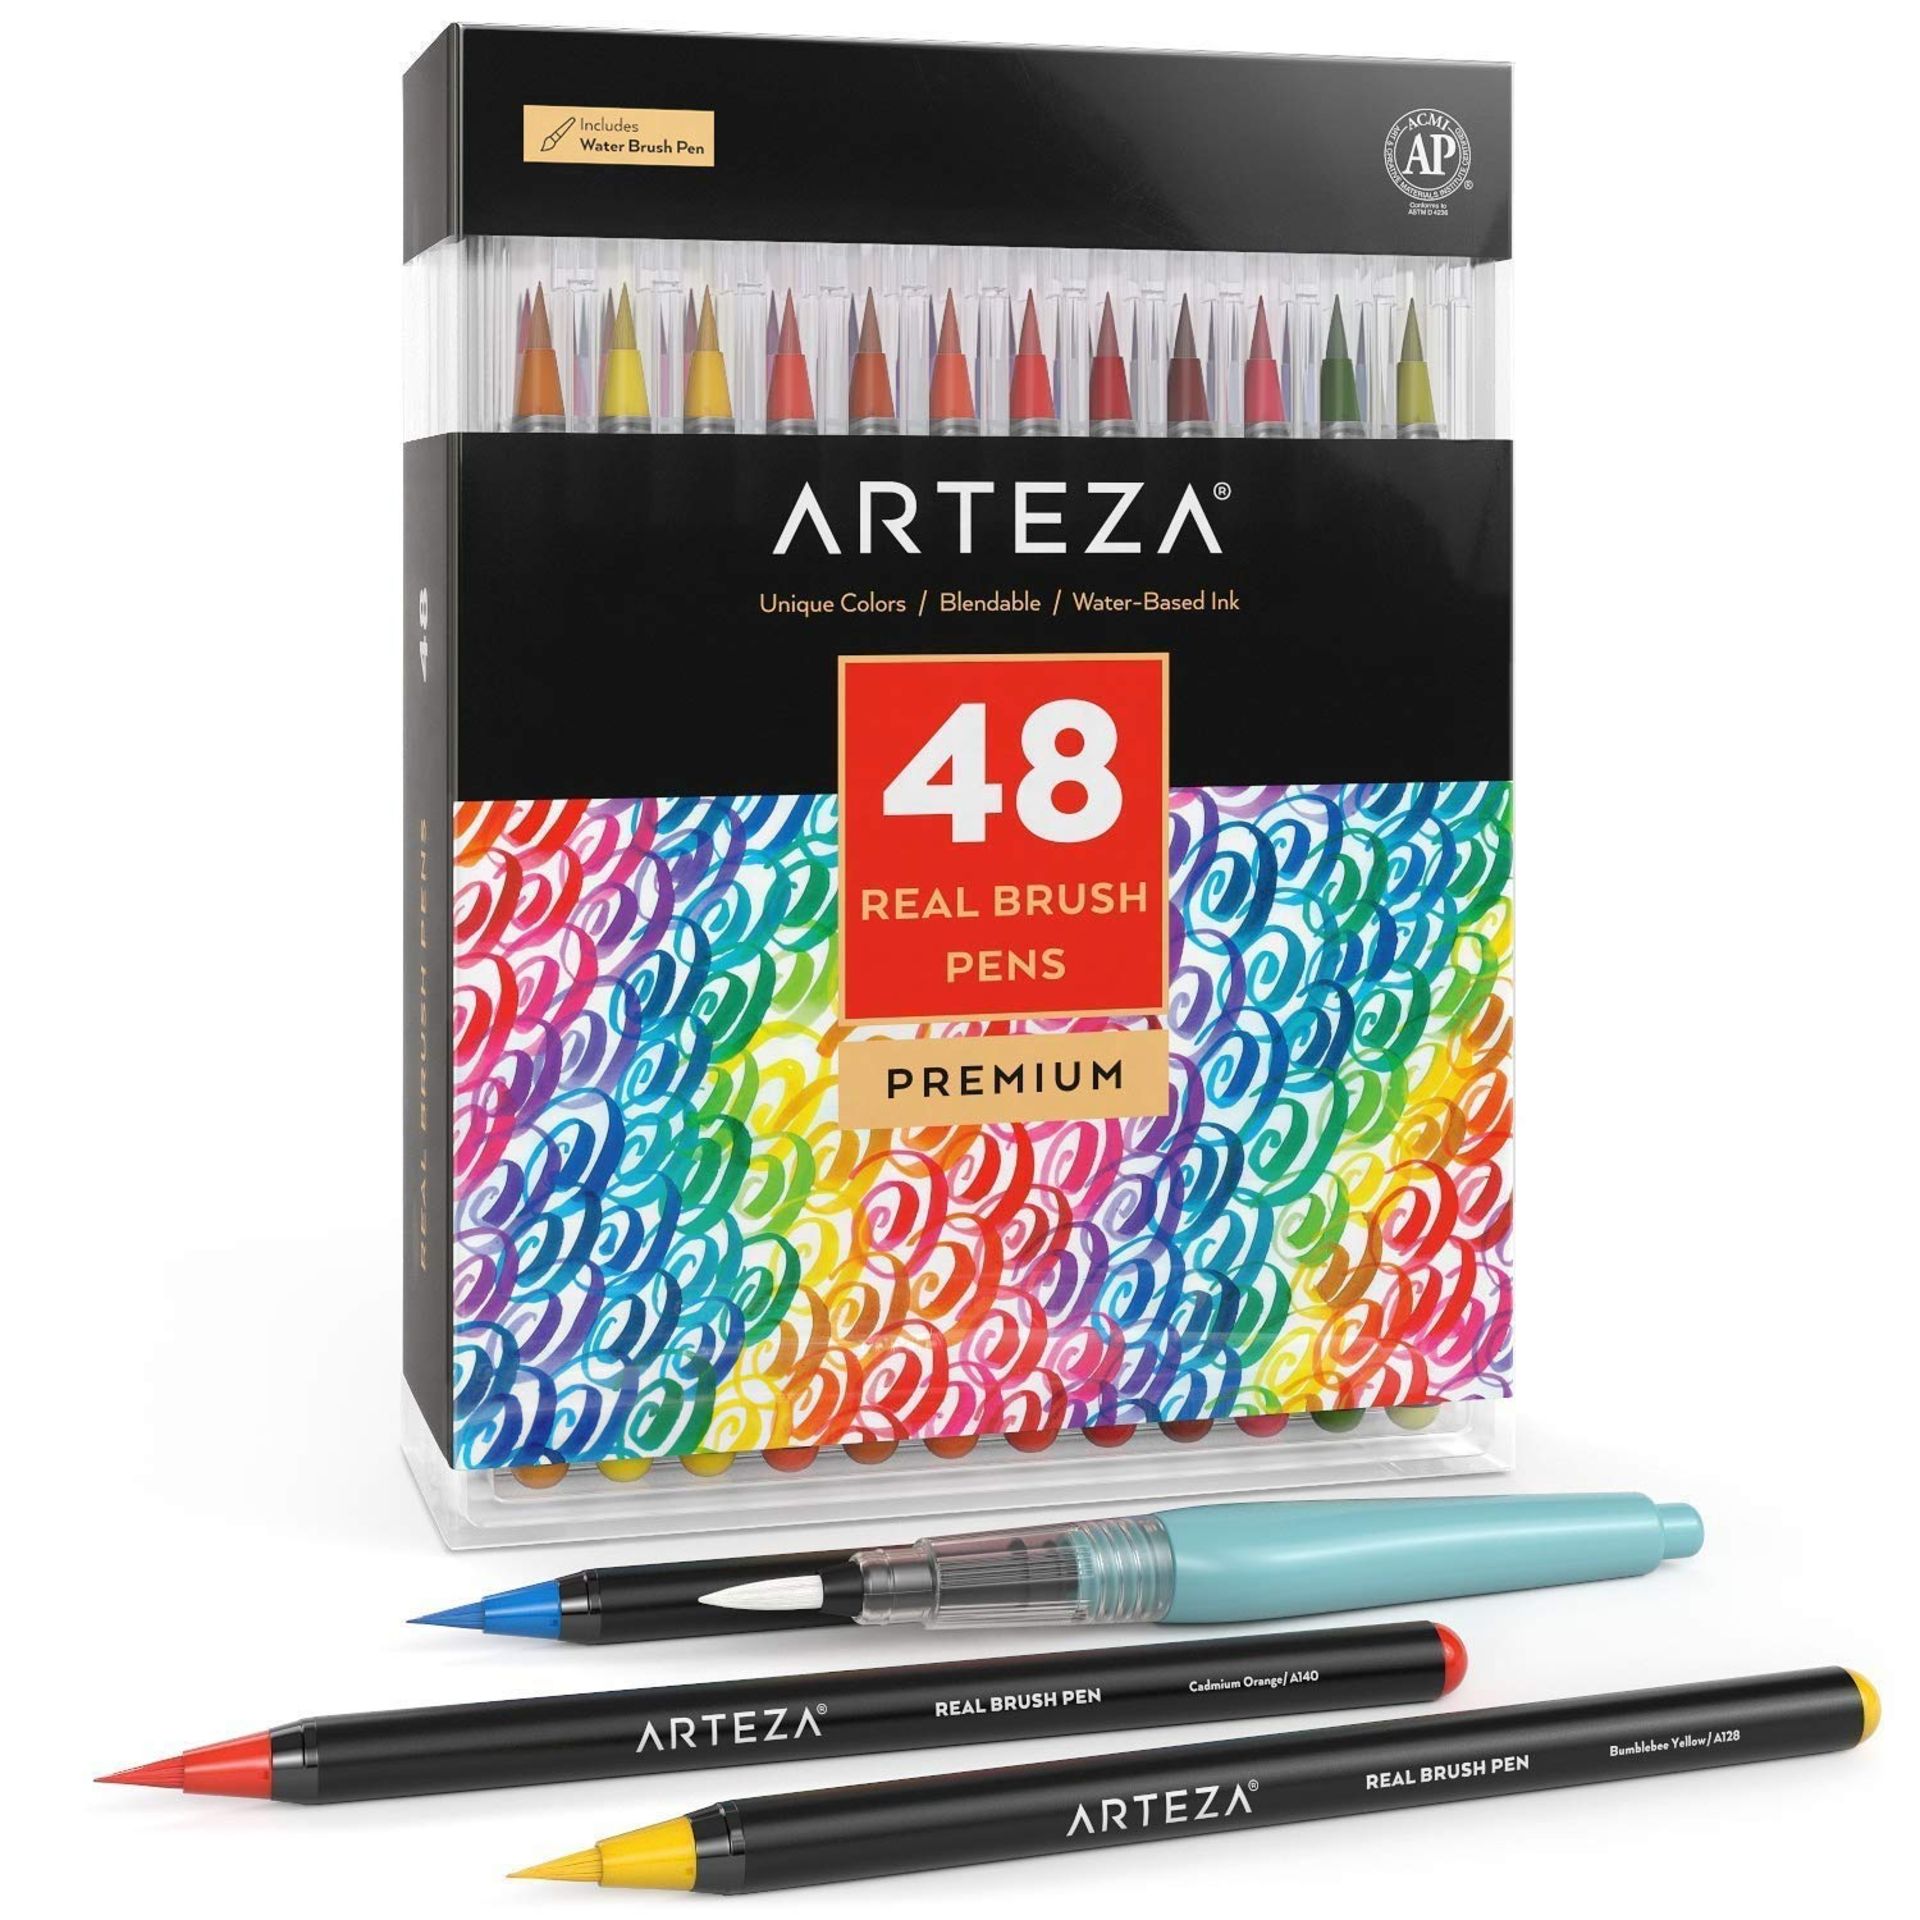 RRP £38.80 BRAND NEW STOCK ARTEZA Real Brush Pens with Flexible Nylon Tips